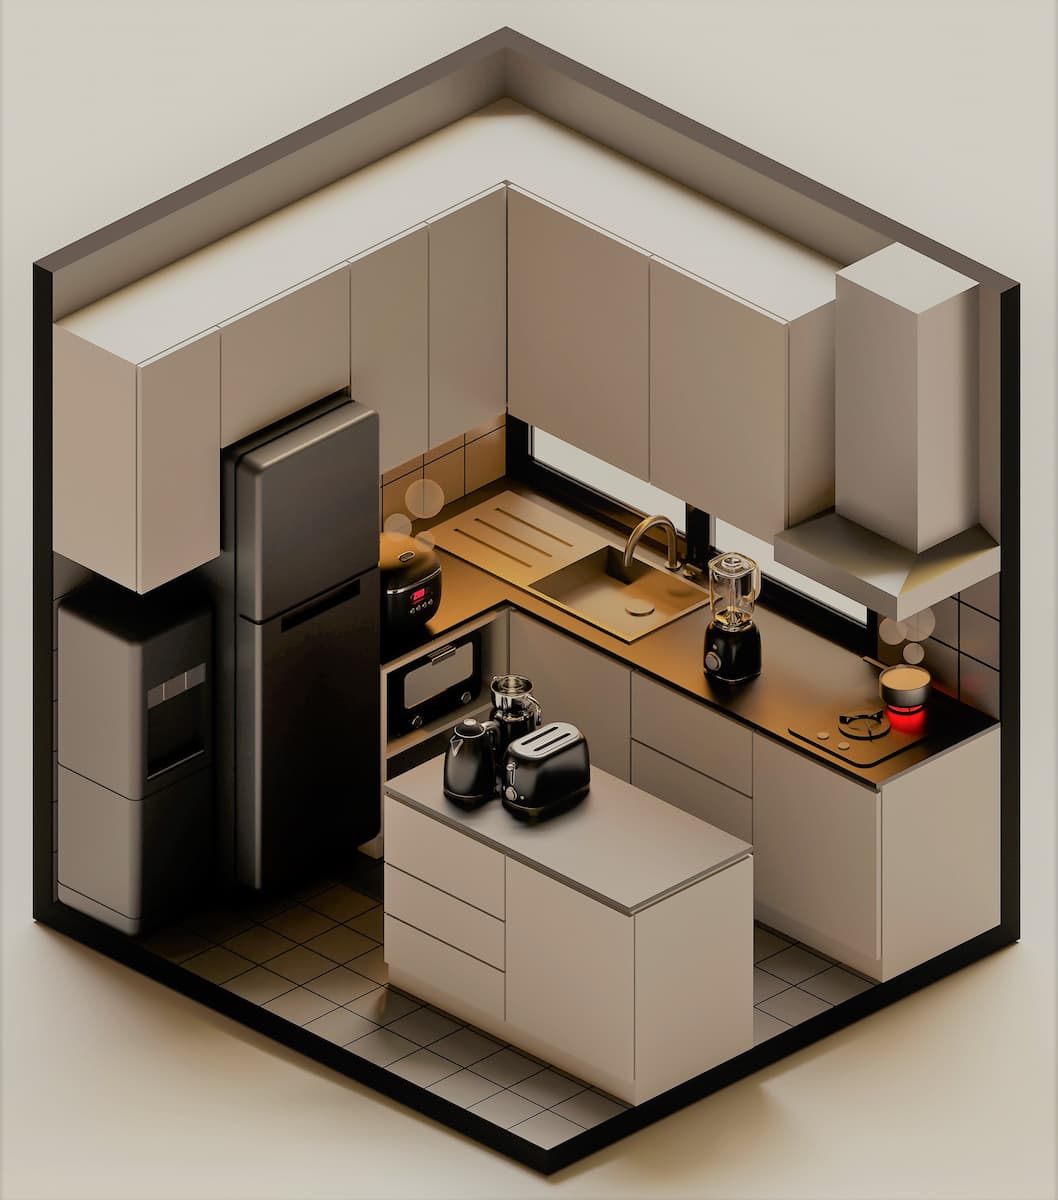 Plan jasnej kuchni zaprojektowany w 3D